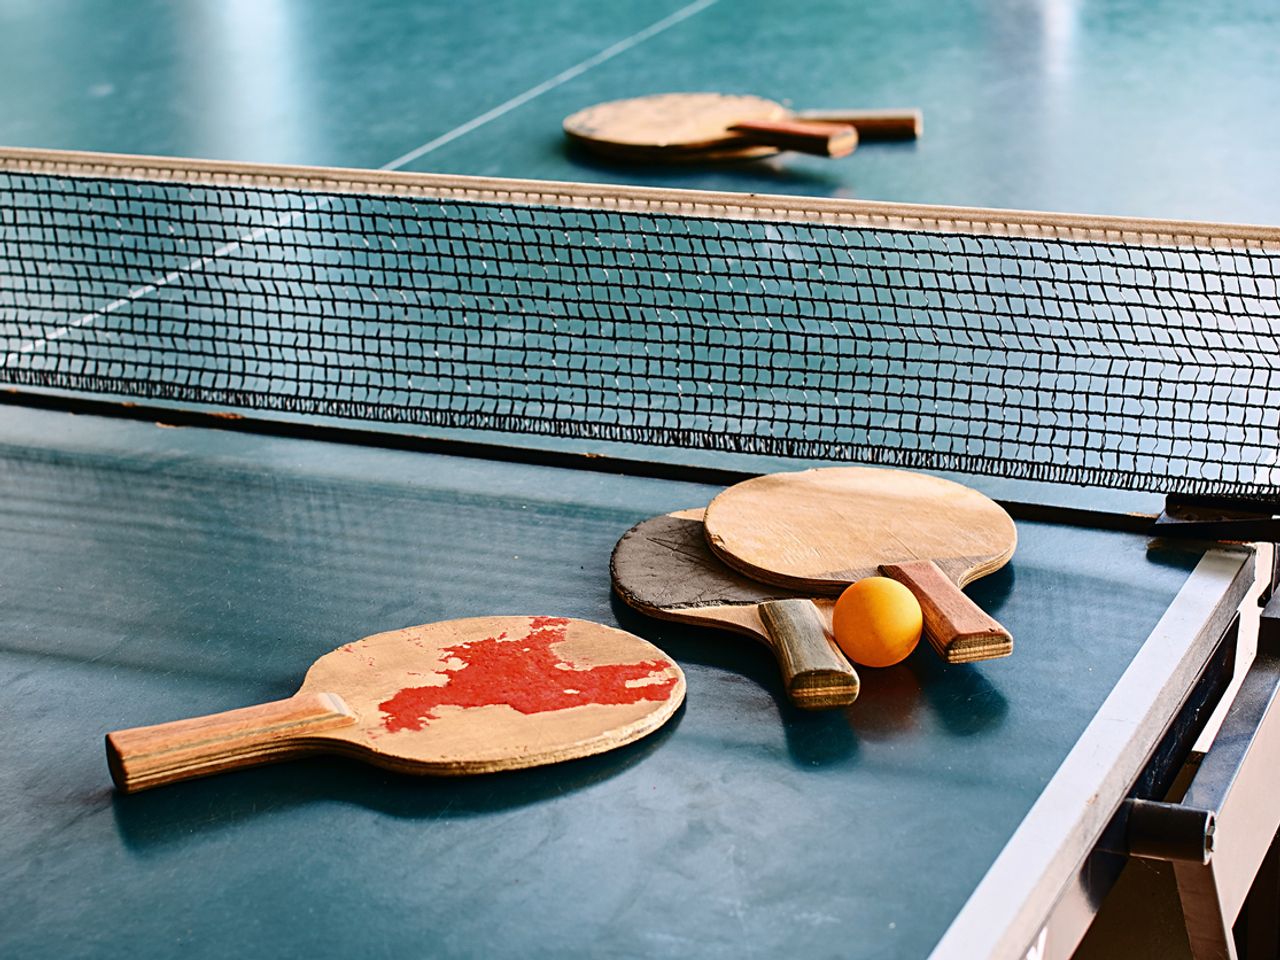 Table Tennis Wallpaper